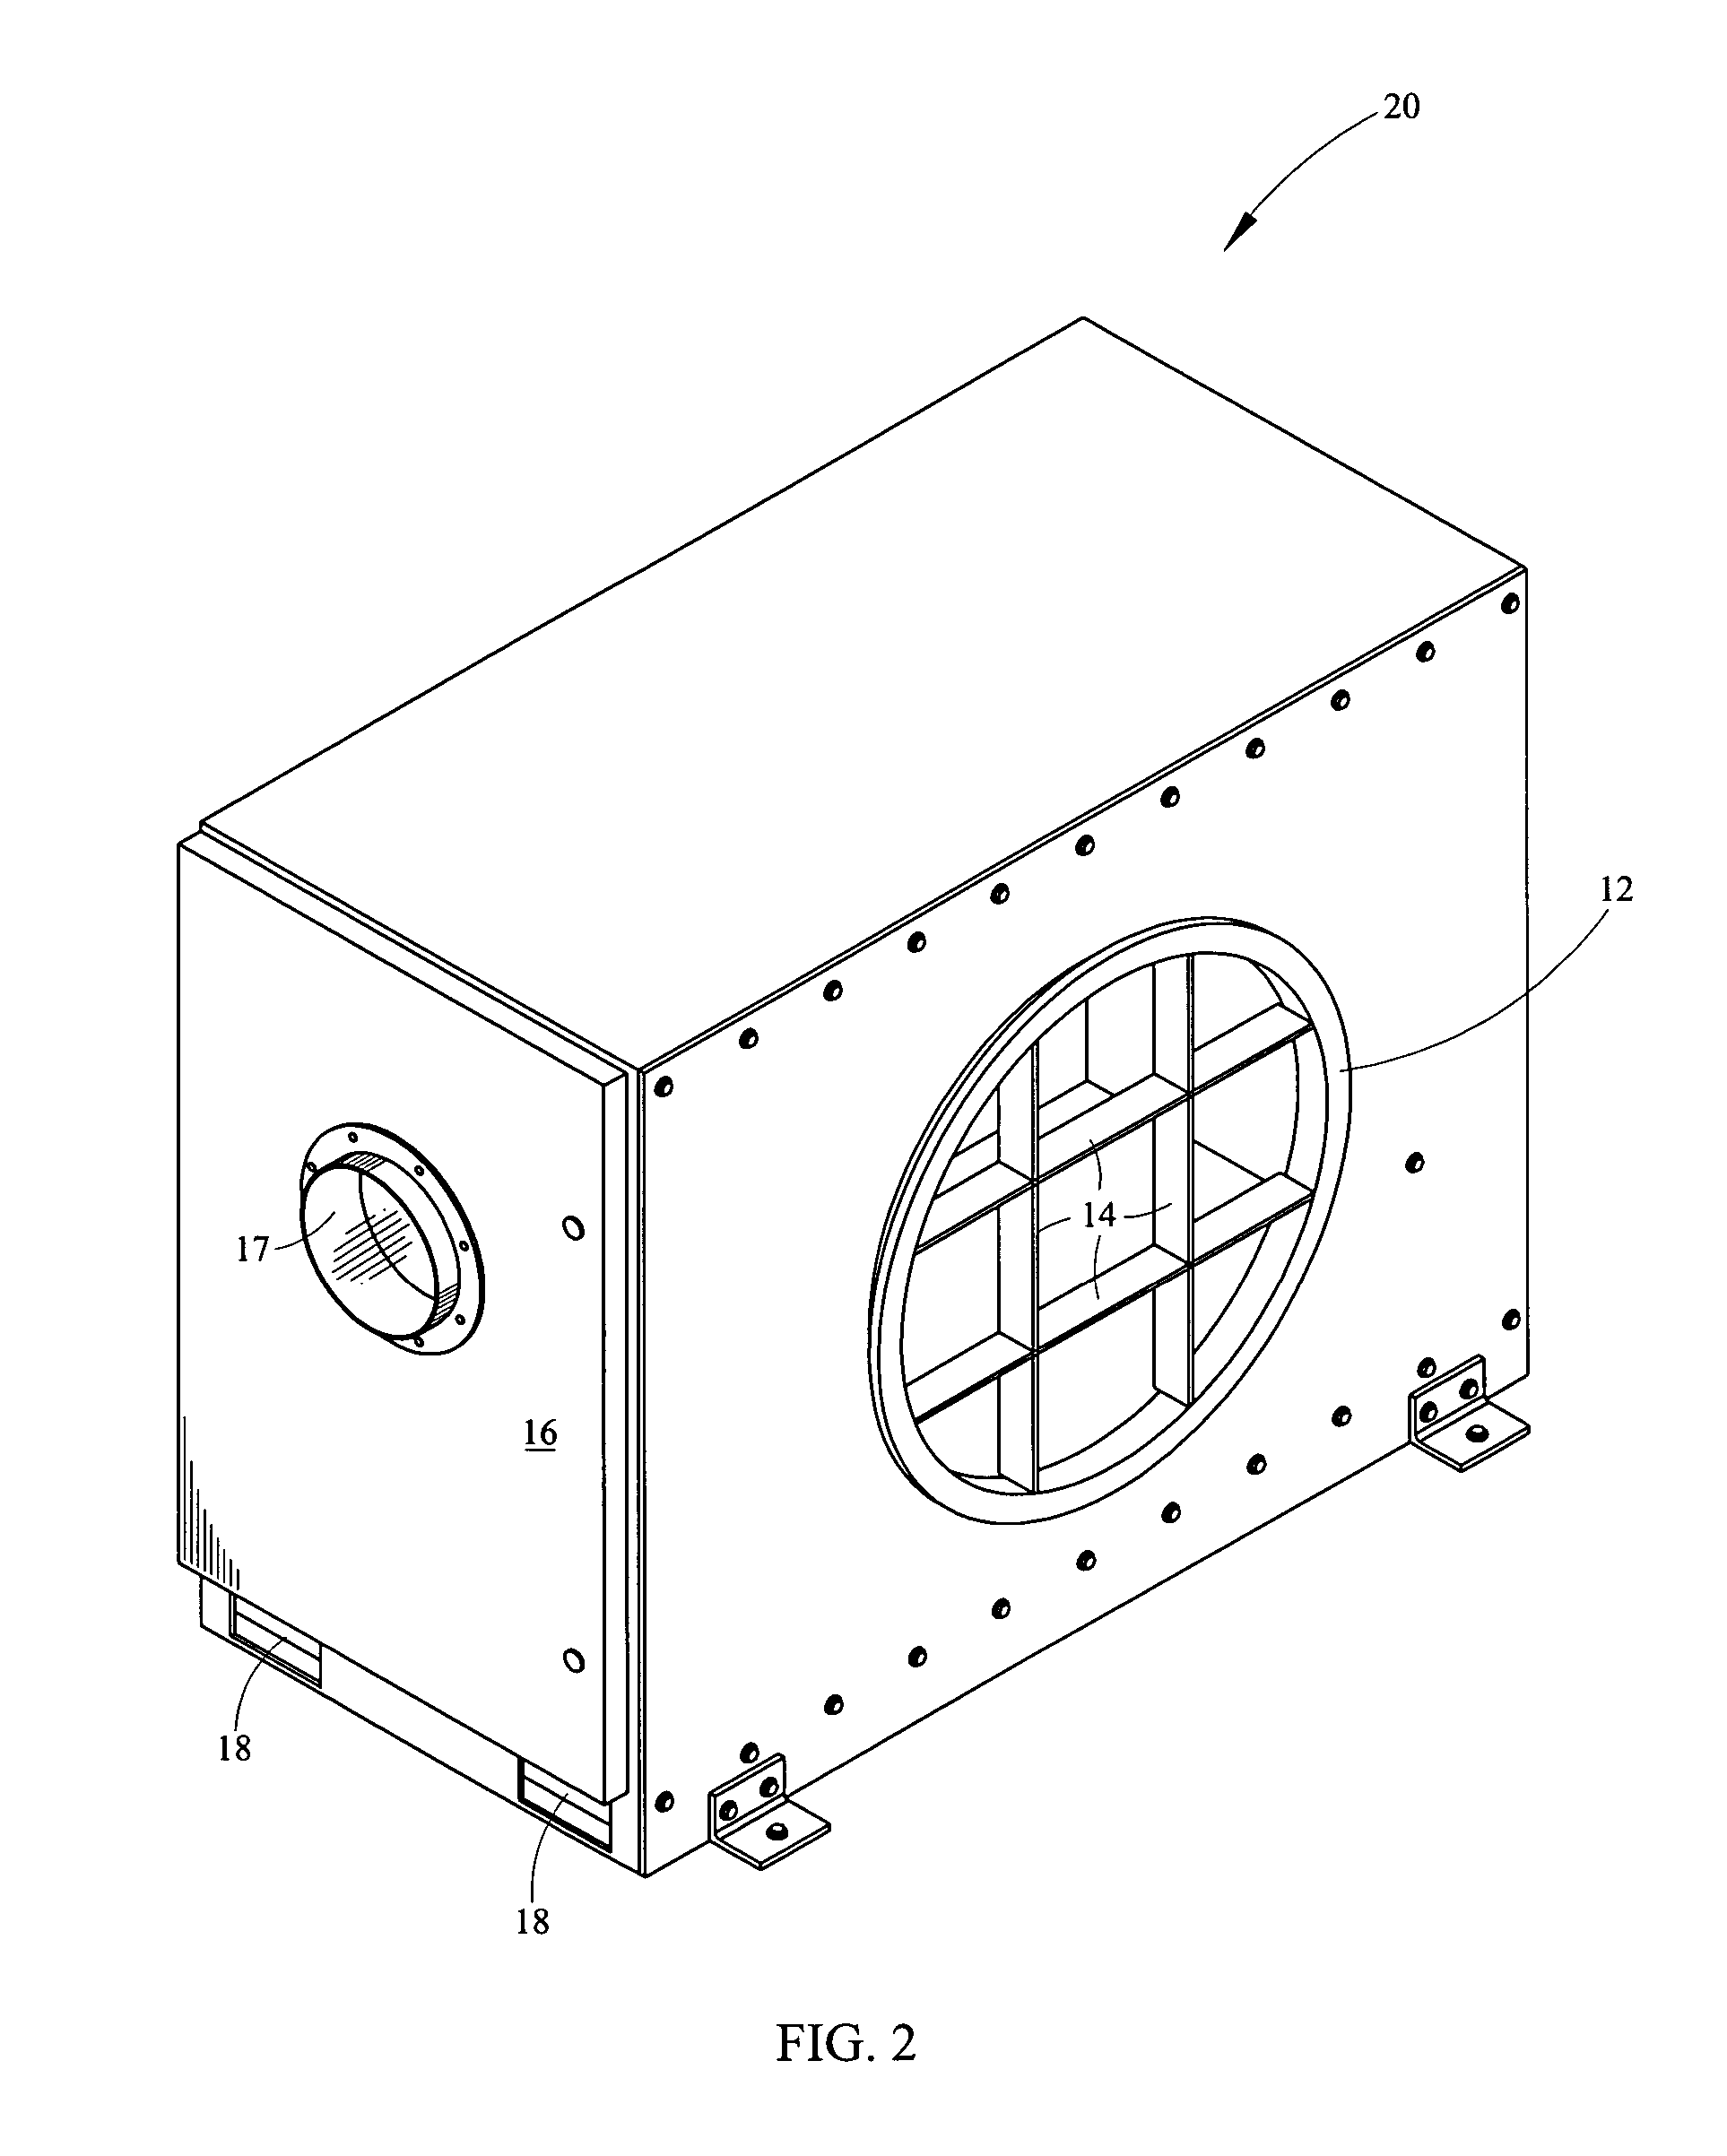 Multi-stage filtering apparatus